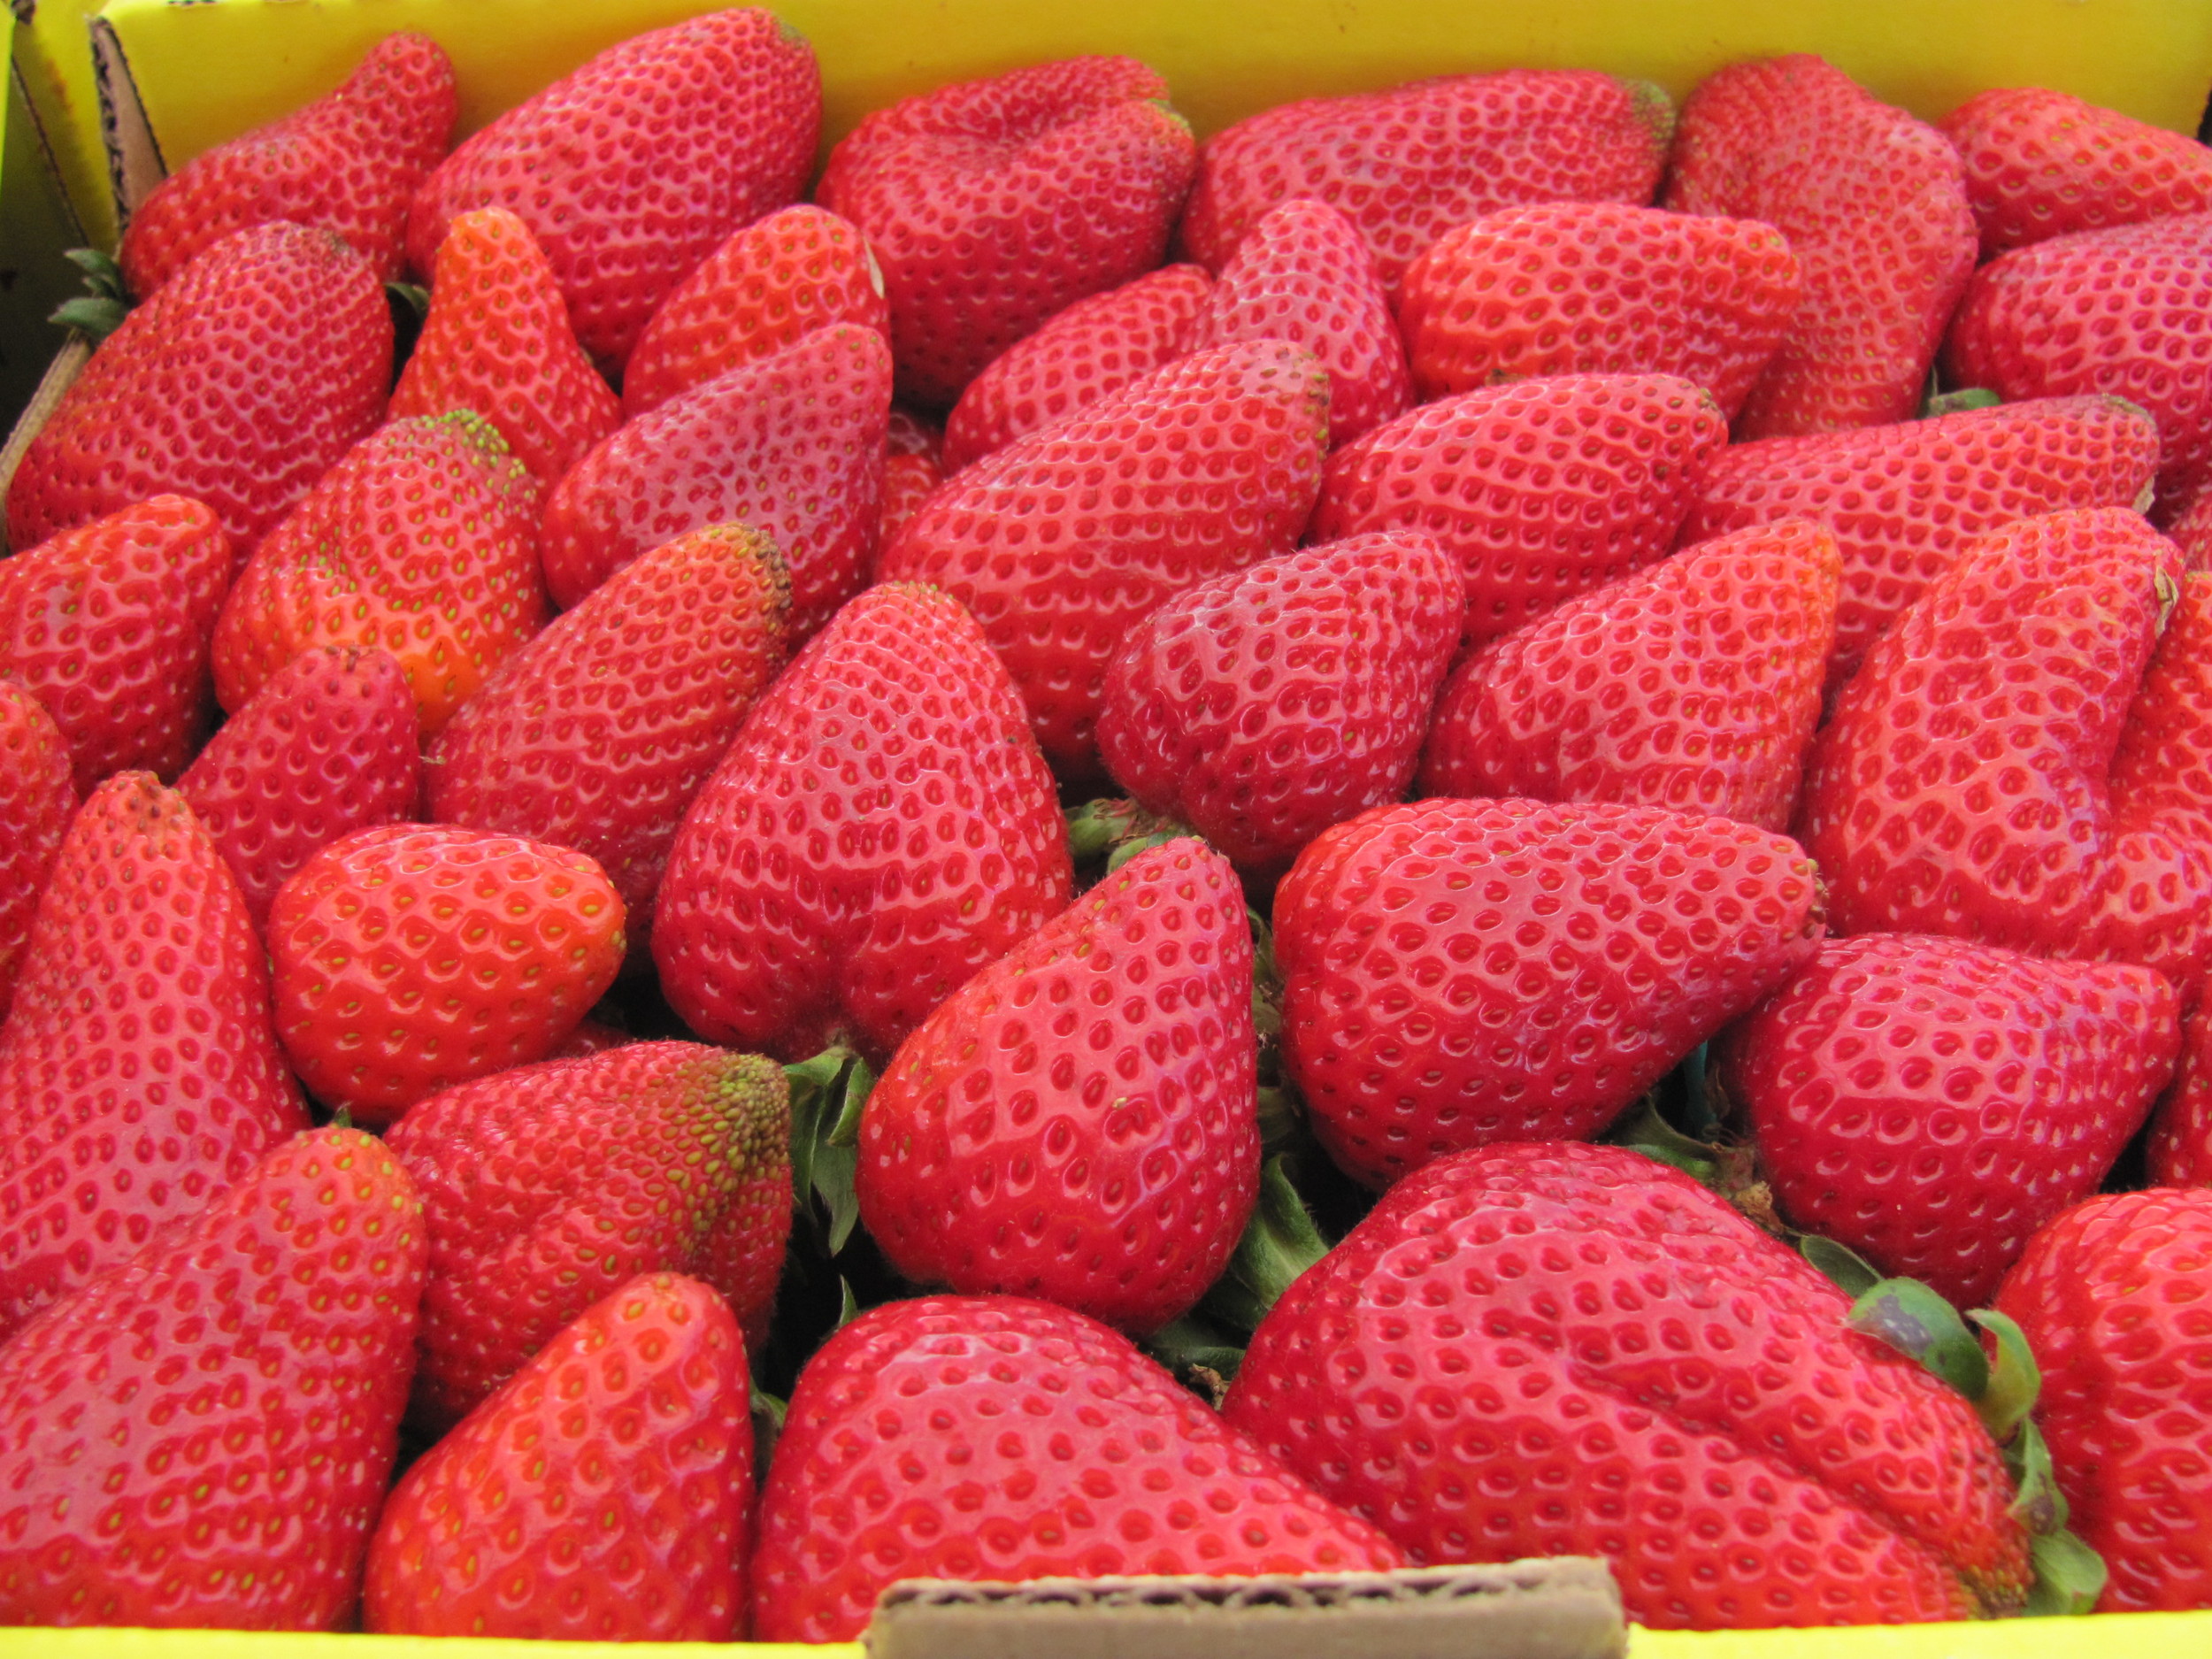 Rossmoor Farmers' Market Strawberries